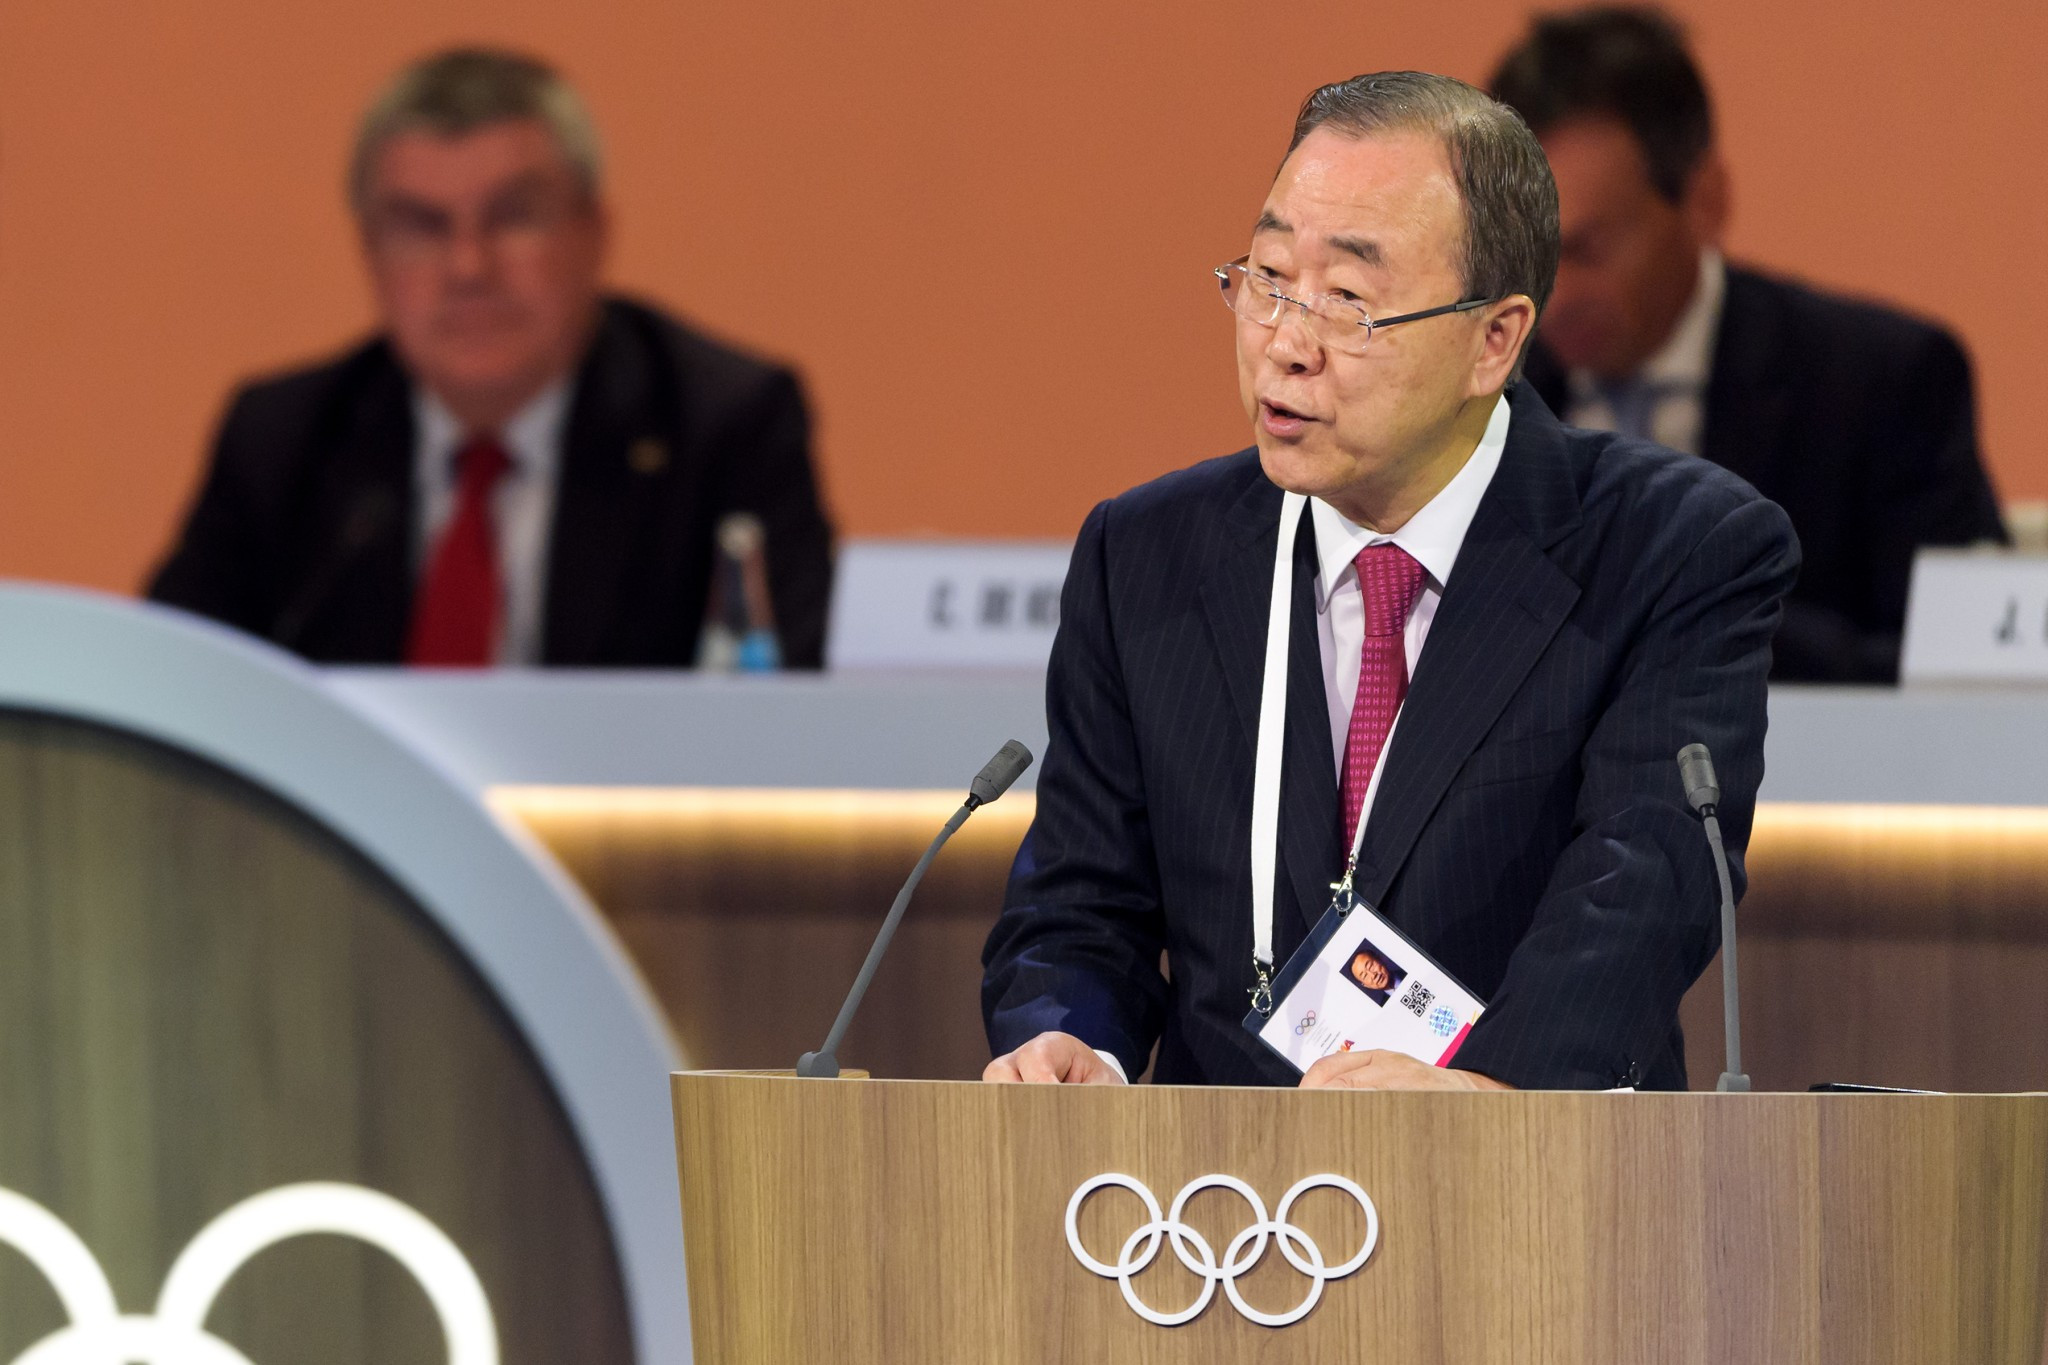 Former UN secretary Ban Ki Moon was named IOC Ethics Commission President ©IOC